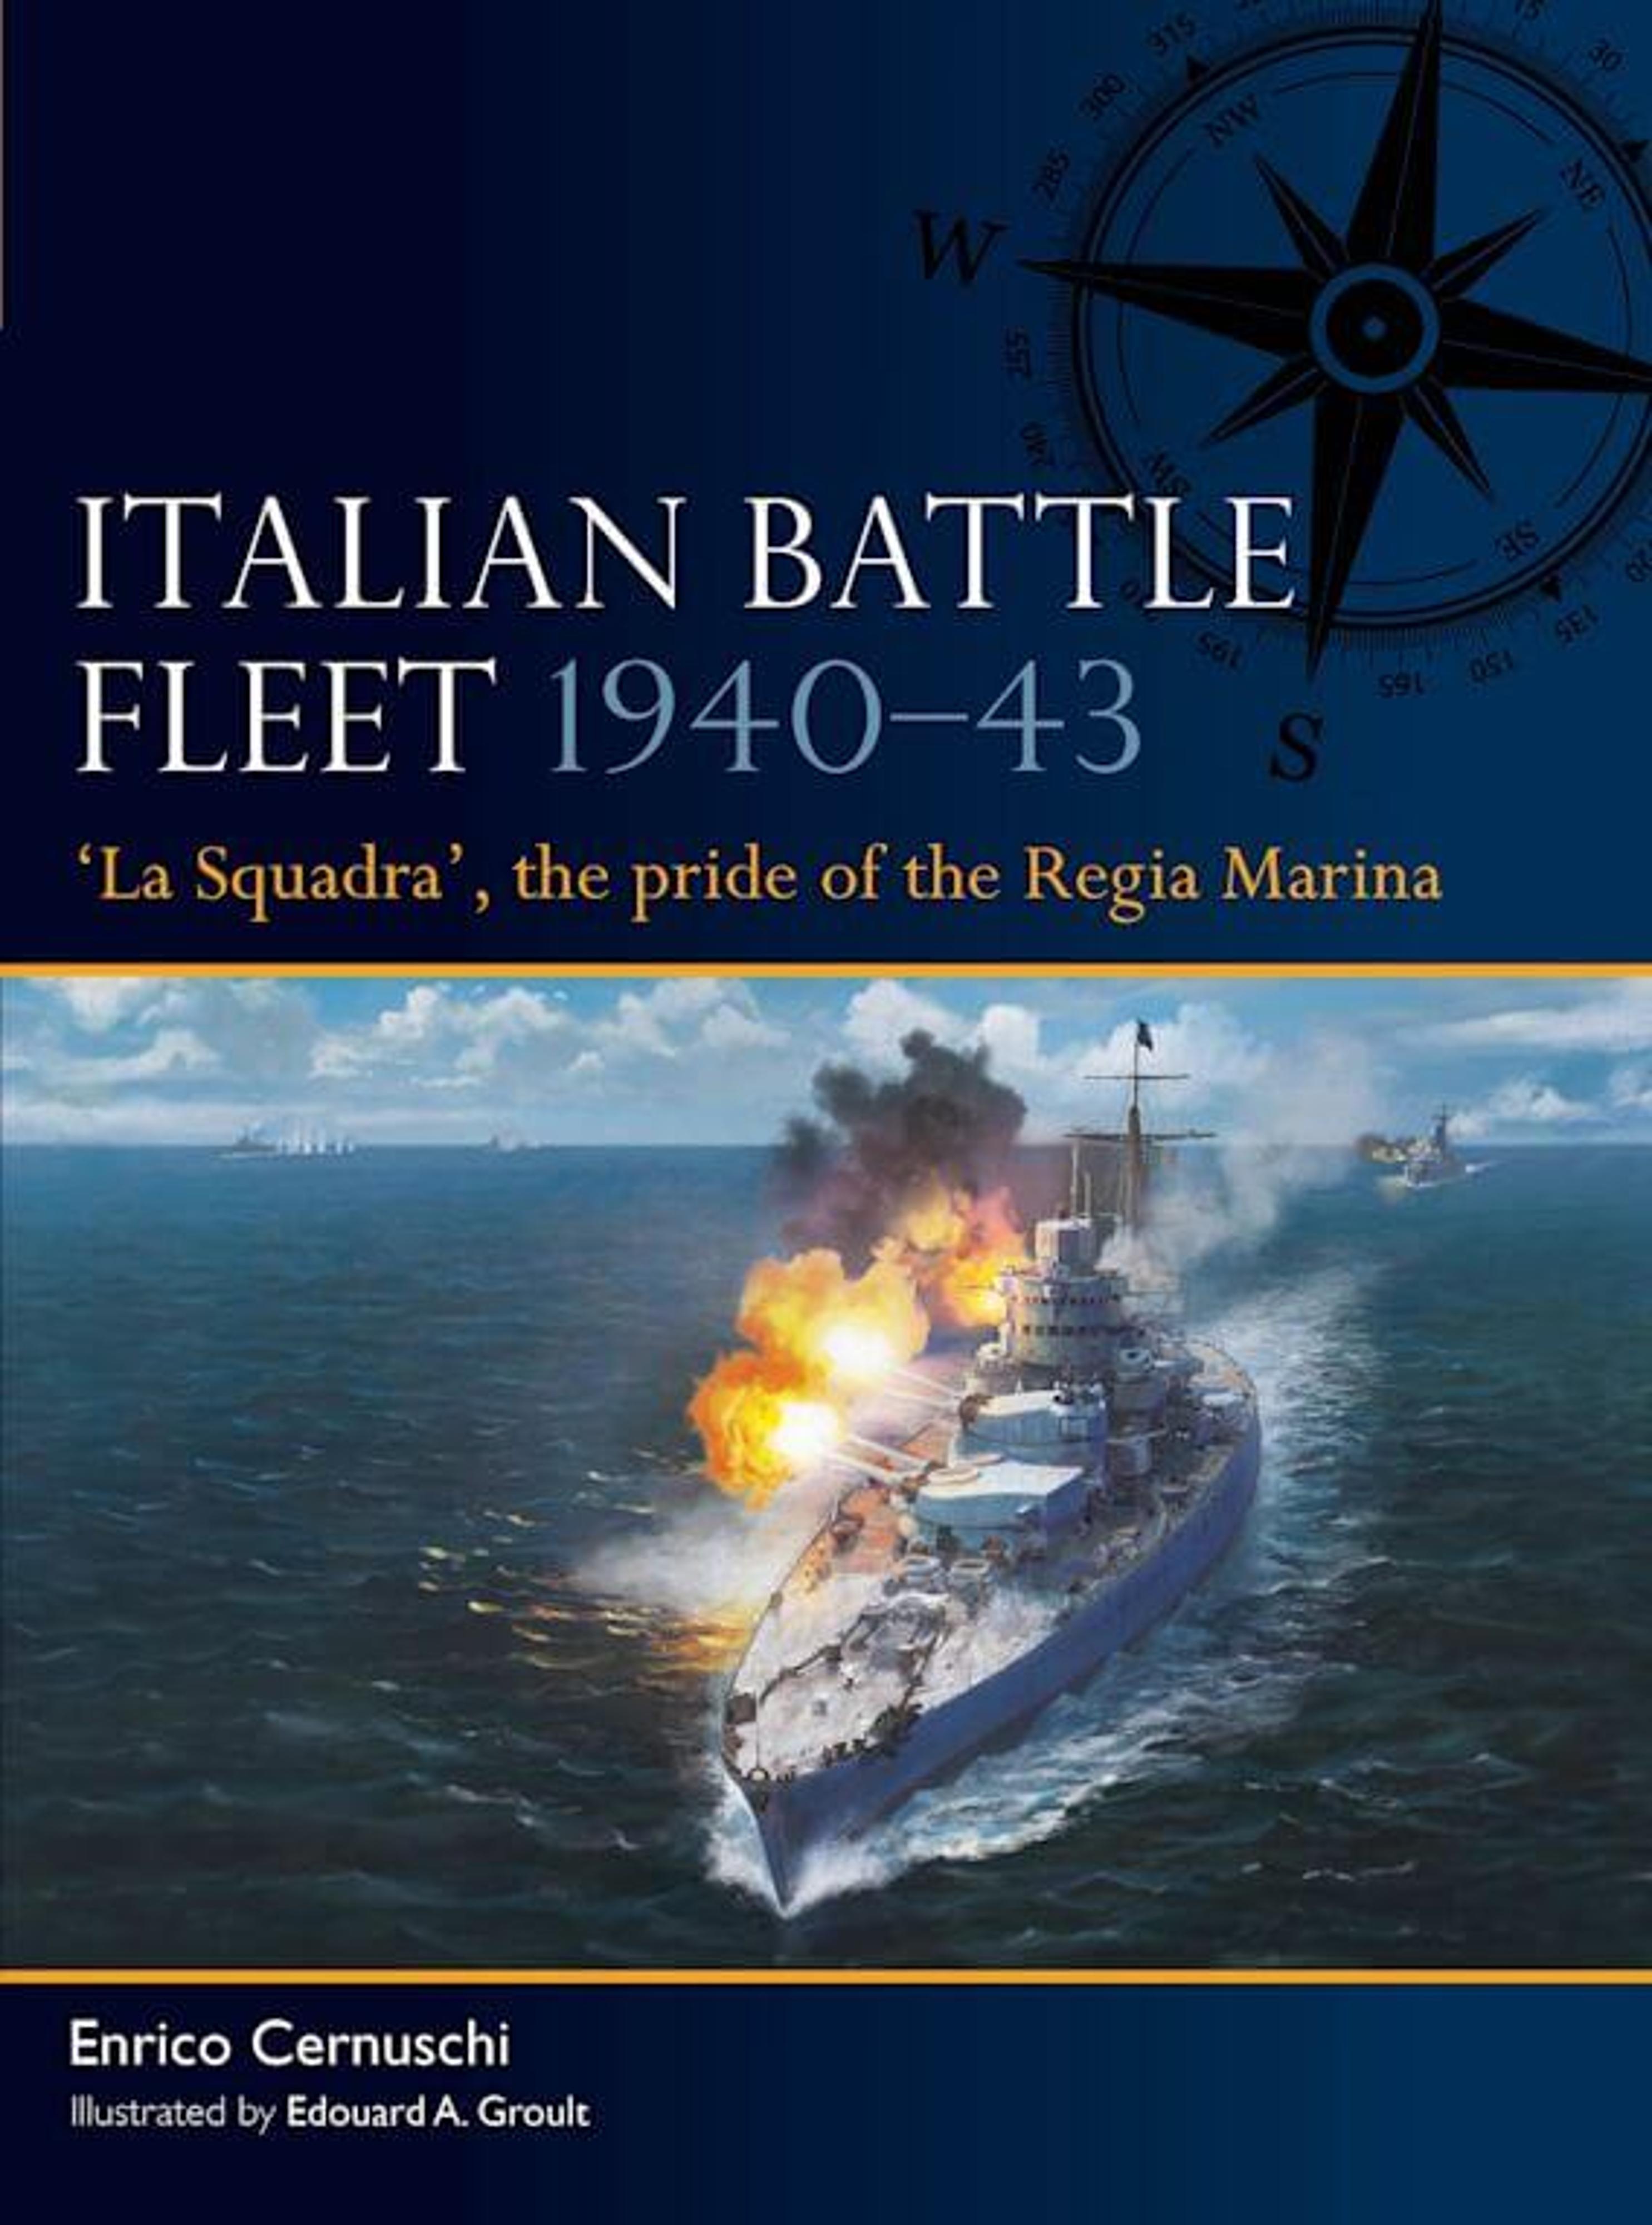 Italian Battle Fleet 1940-43: La Squadra, the Pride of the Regia Marina